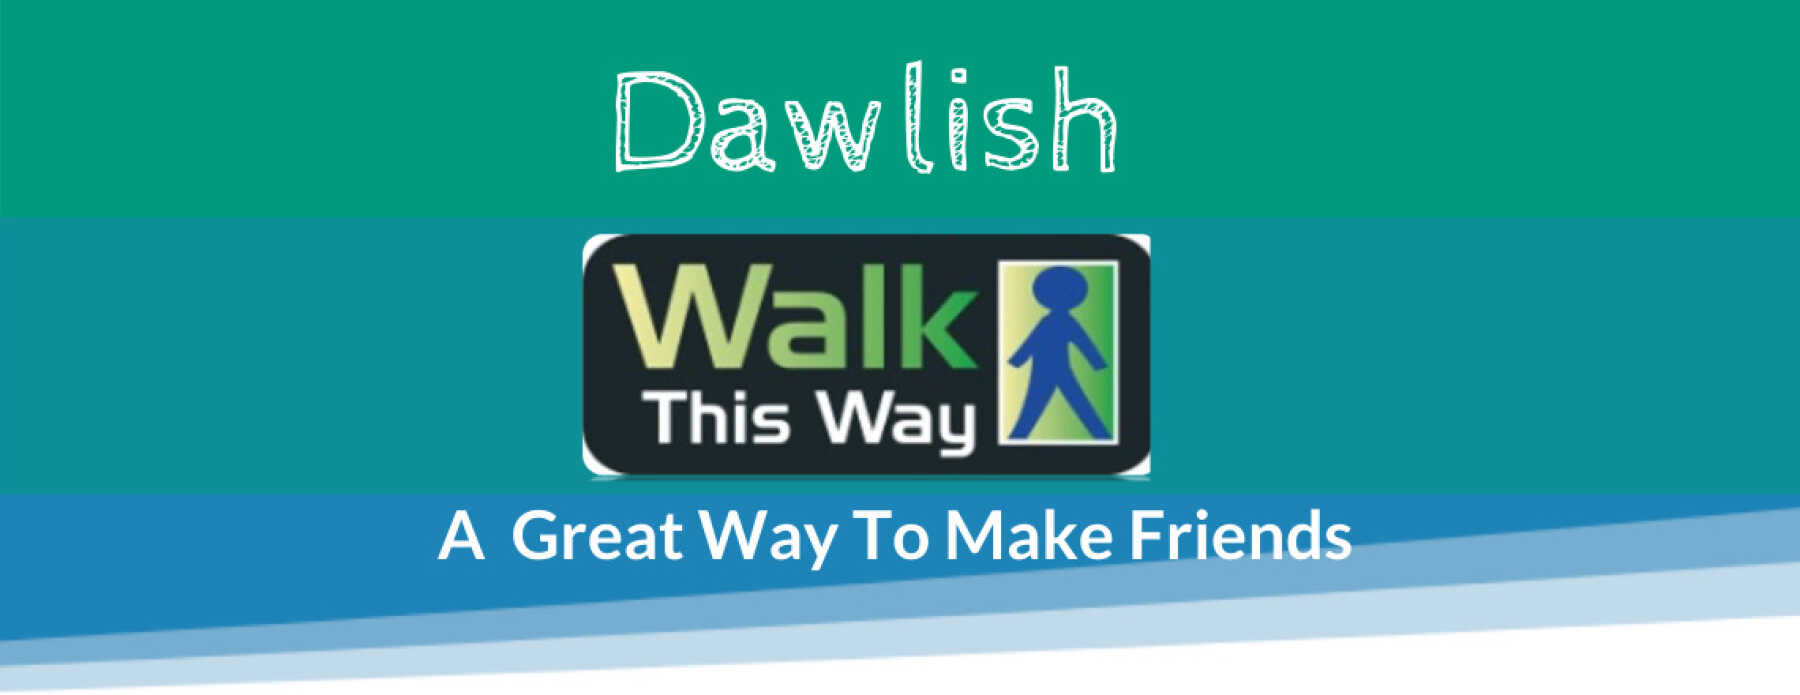 Featured Image for Dawlish Walkers - Ramblers Wellness Walks